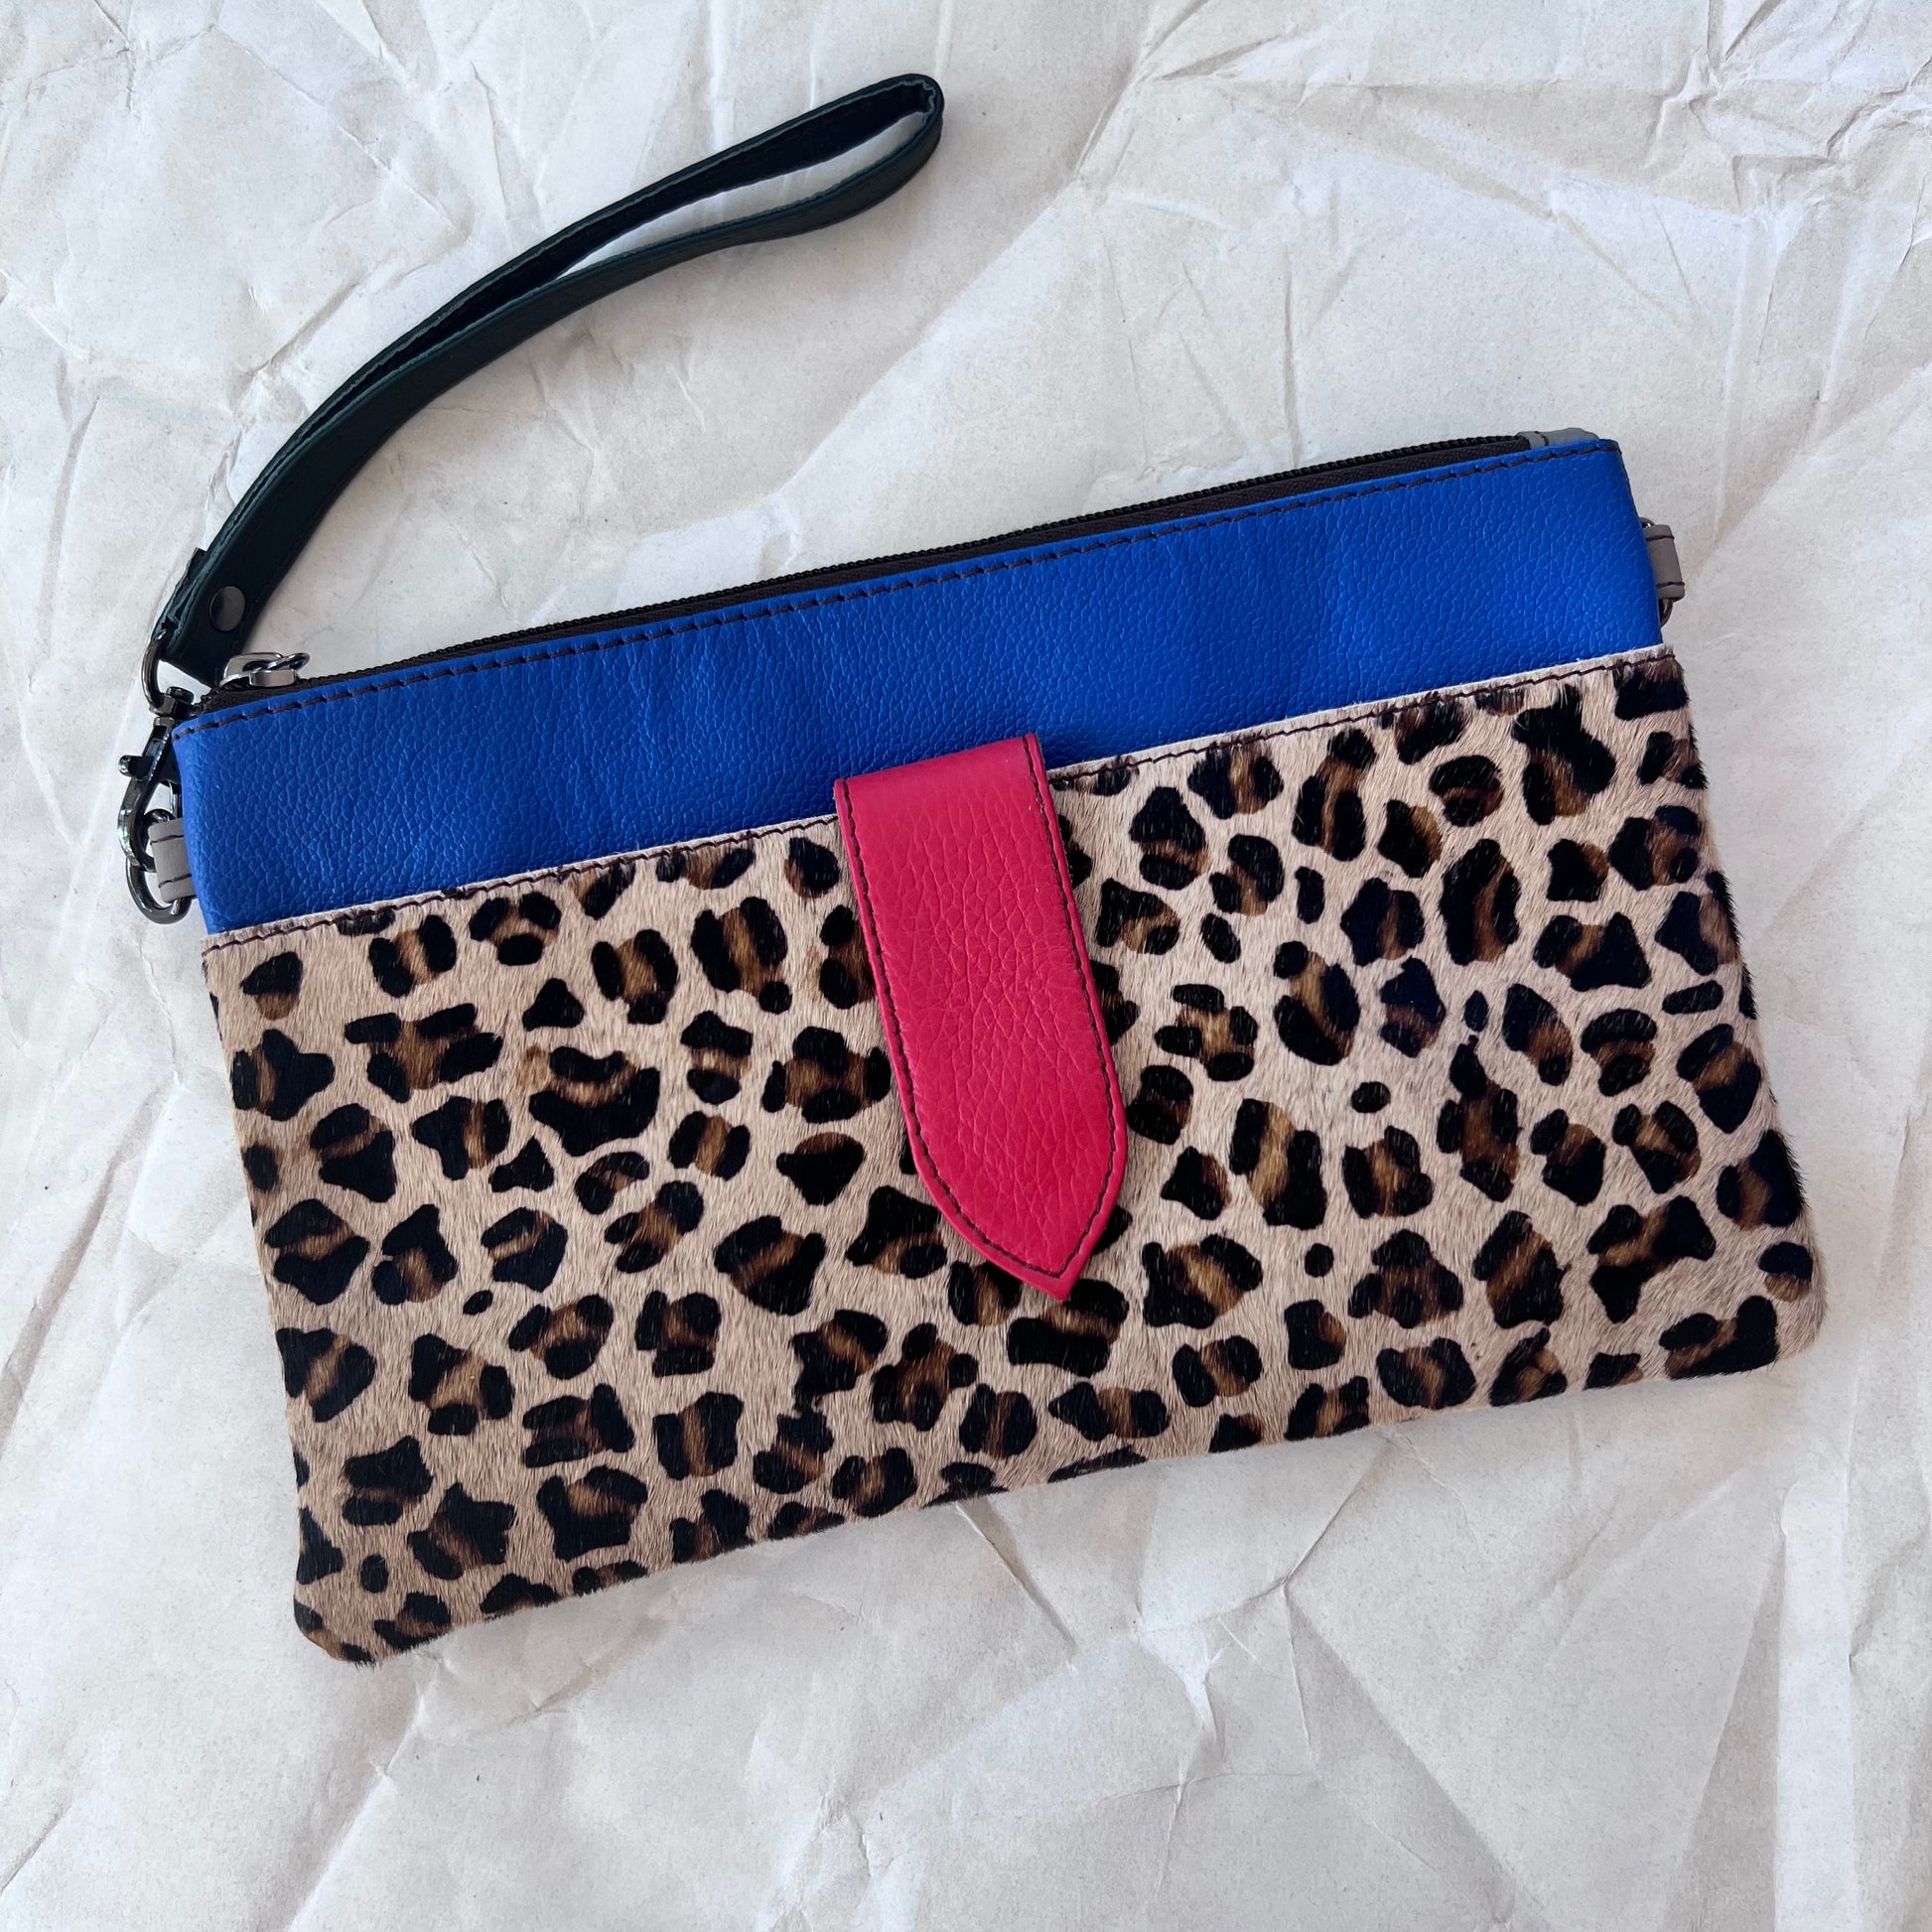 blue rectangular bag with cheetah print pocket, purple tab, and wristlet strap.